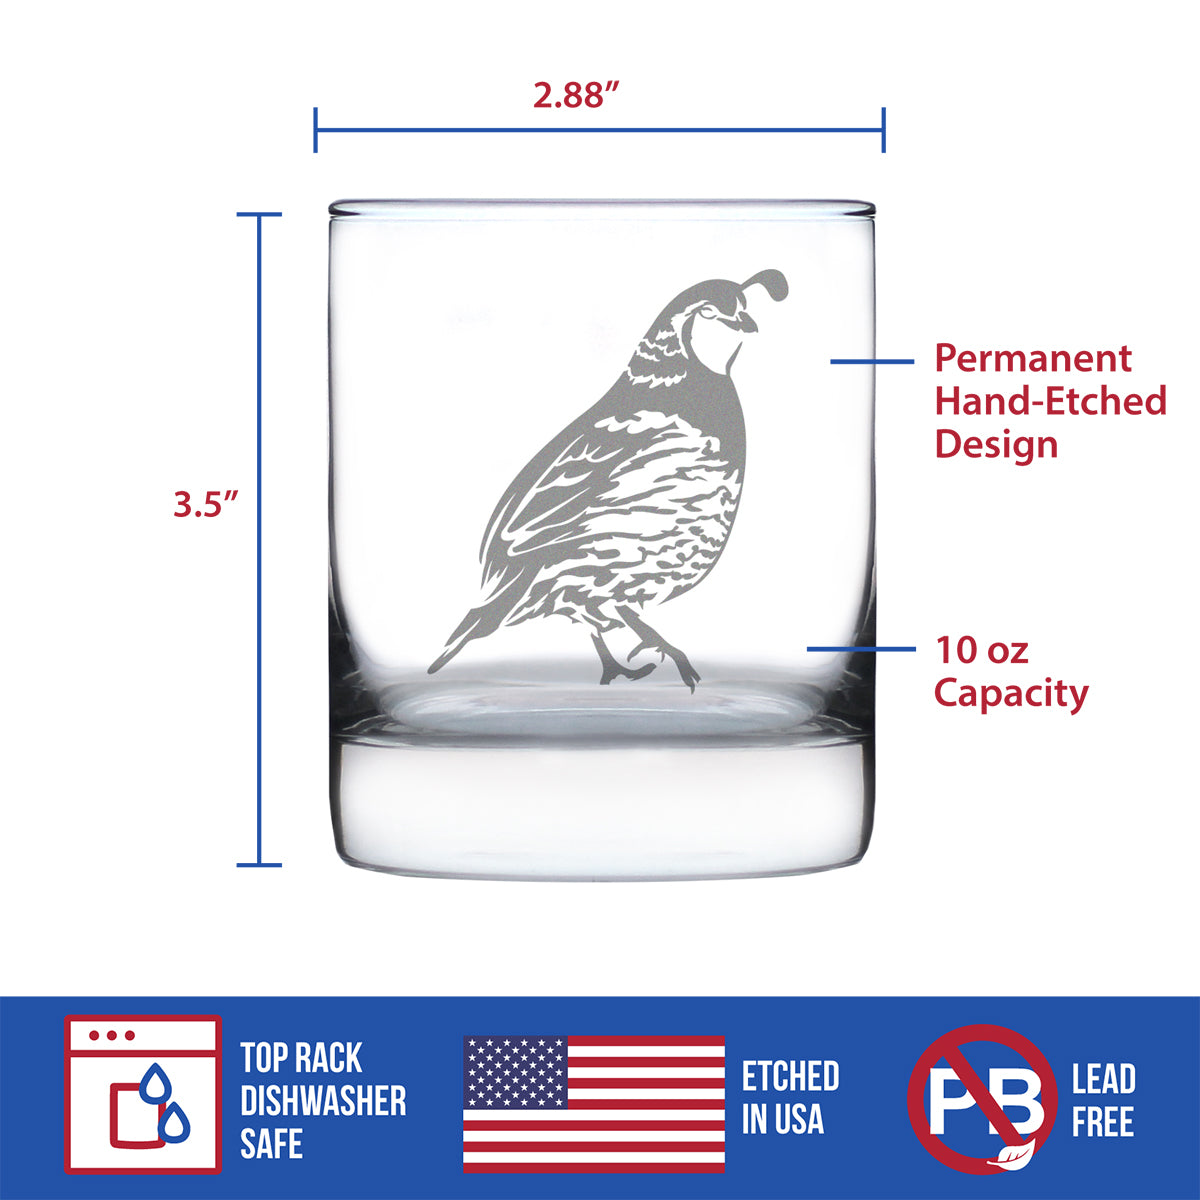 Quail Whiskey Rocks Glass - Fun Bird Themed Gifts and Decor for Men &amp; Women - 10.25 Glasses